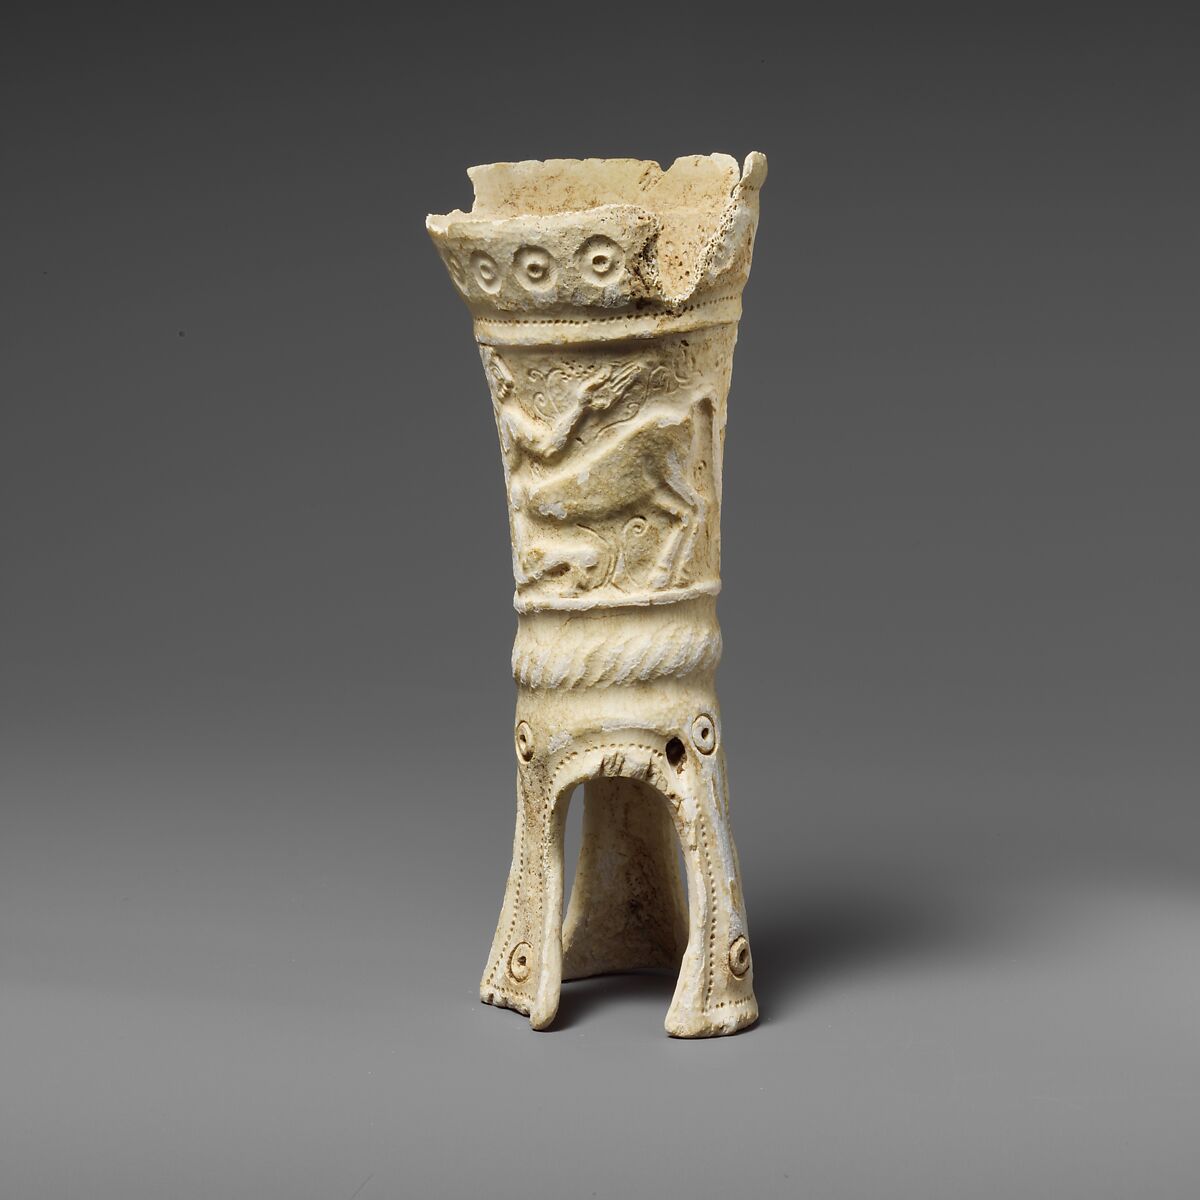 Bone stand with relief of a centaur, Bone, Greek 